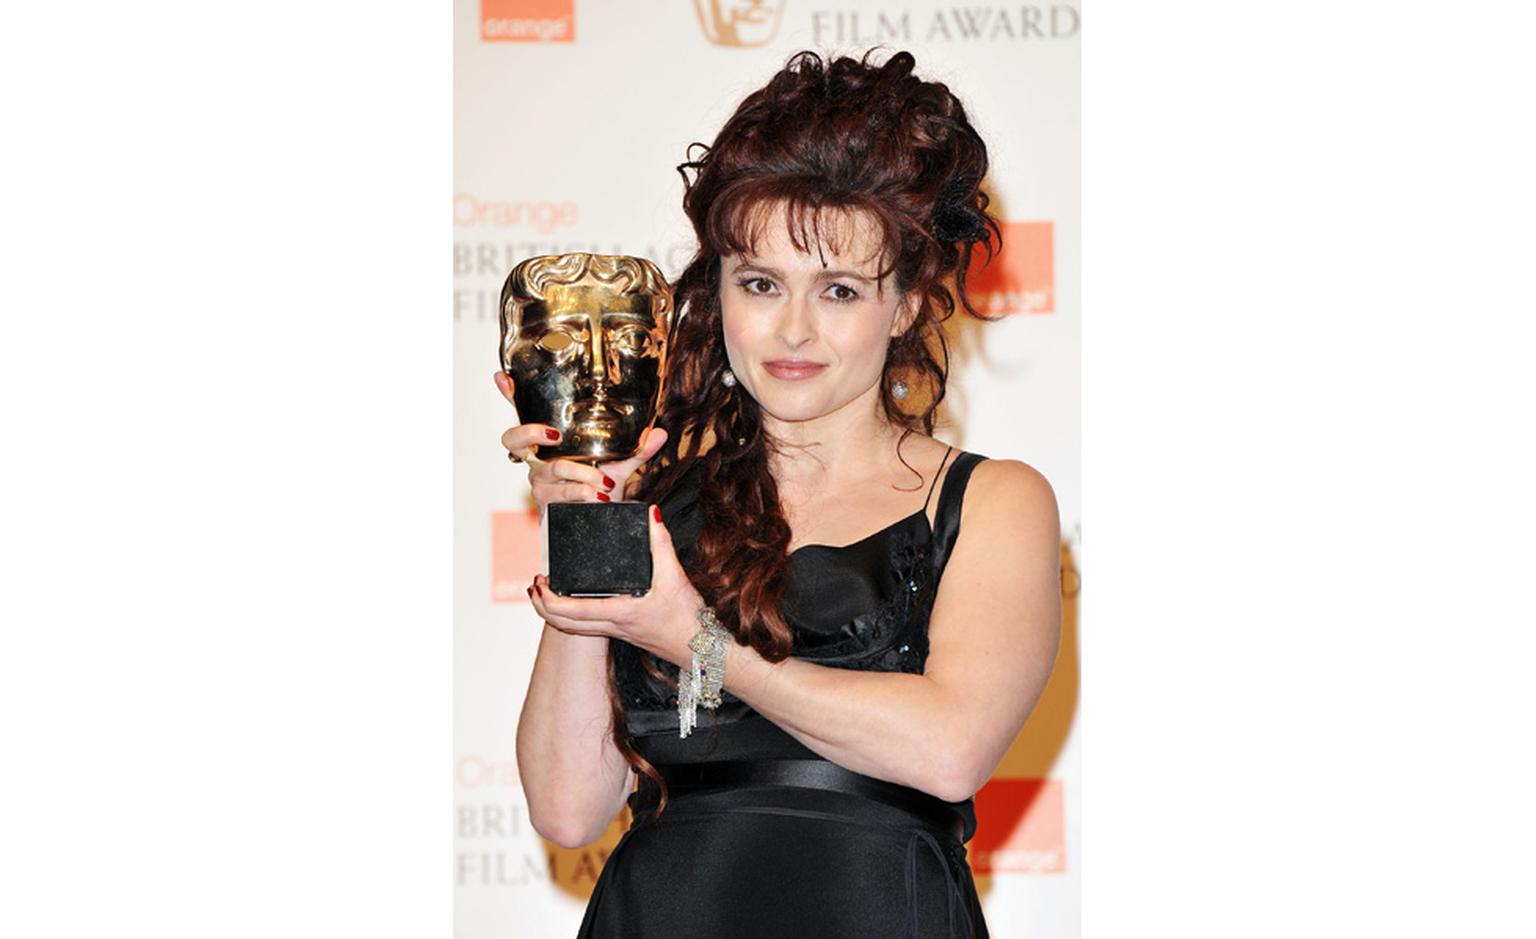 Helena Bonham Carter collects her BAFTA award wearing Solange Azagury-Partridge bracelet and earrings